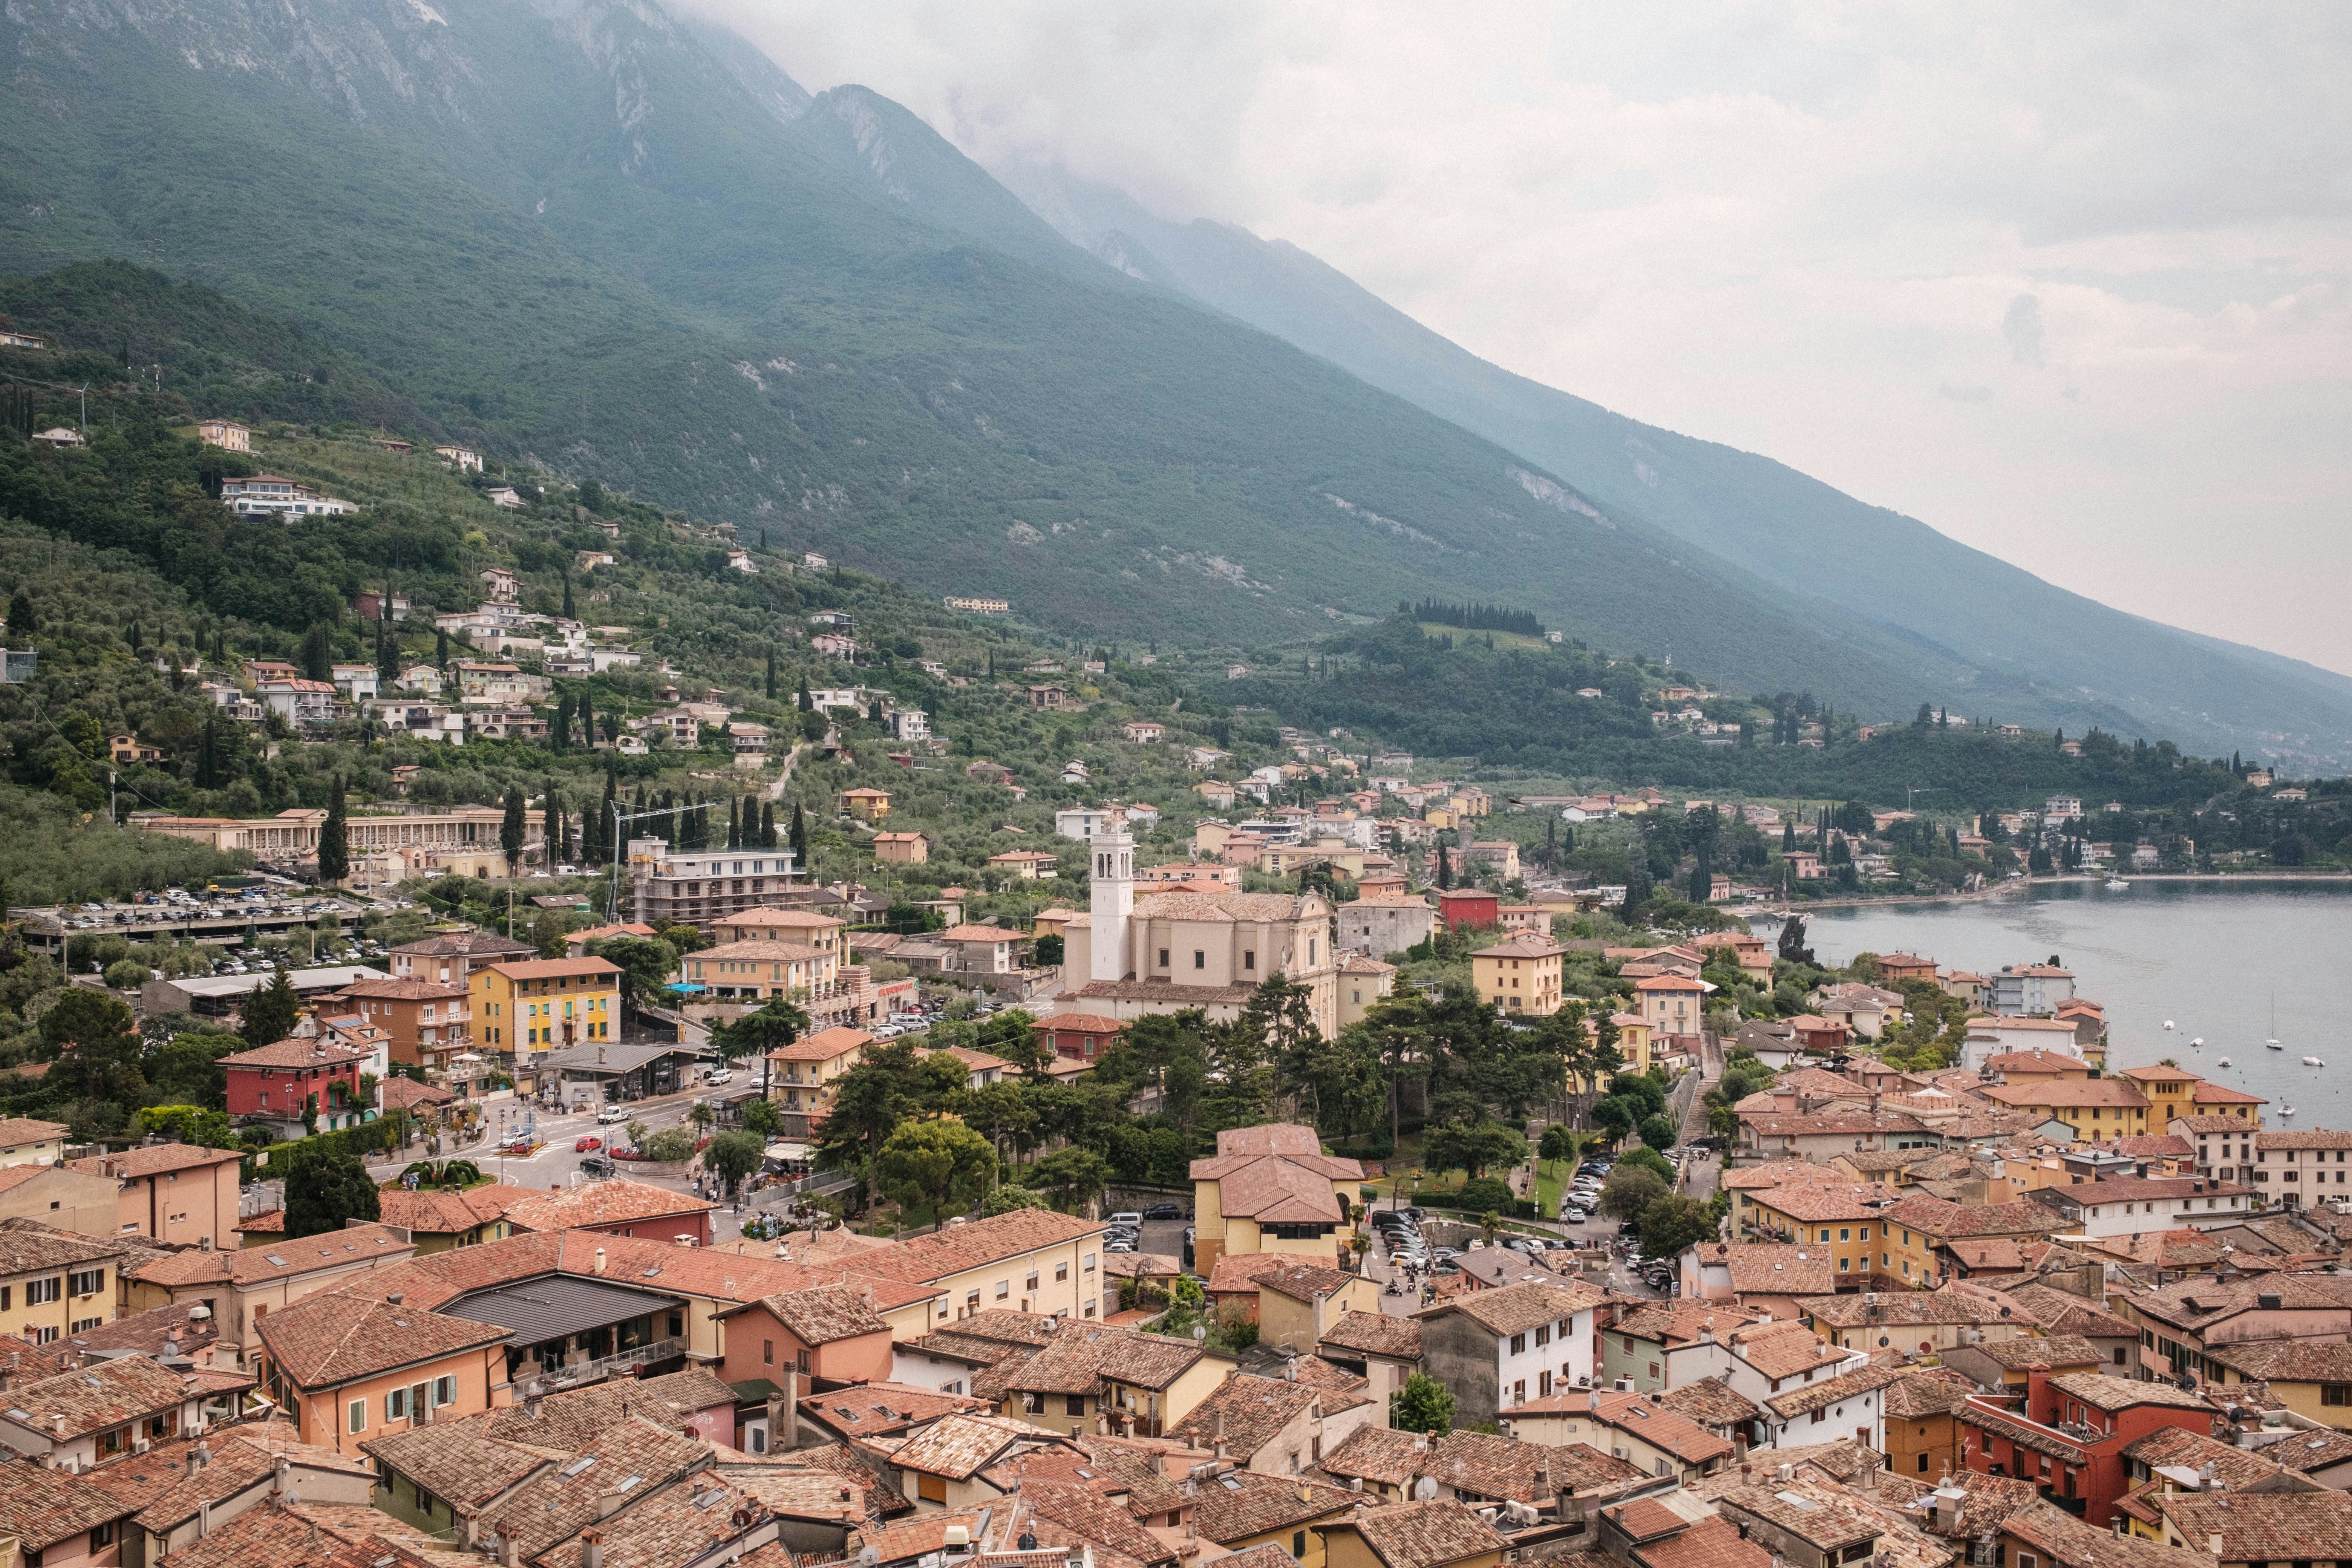 Malcesine offers easy access to Monte Baldo